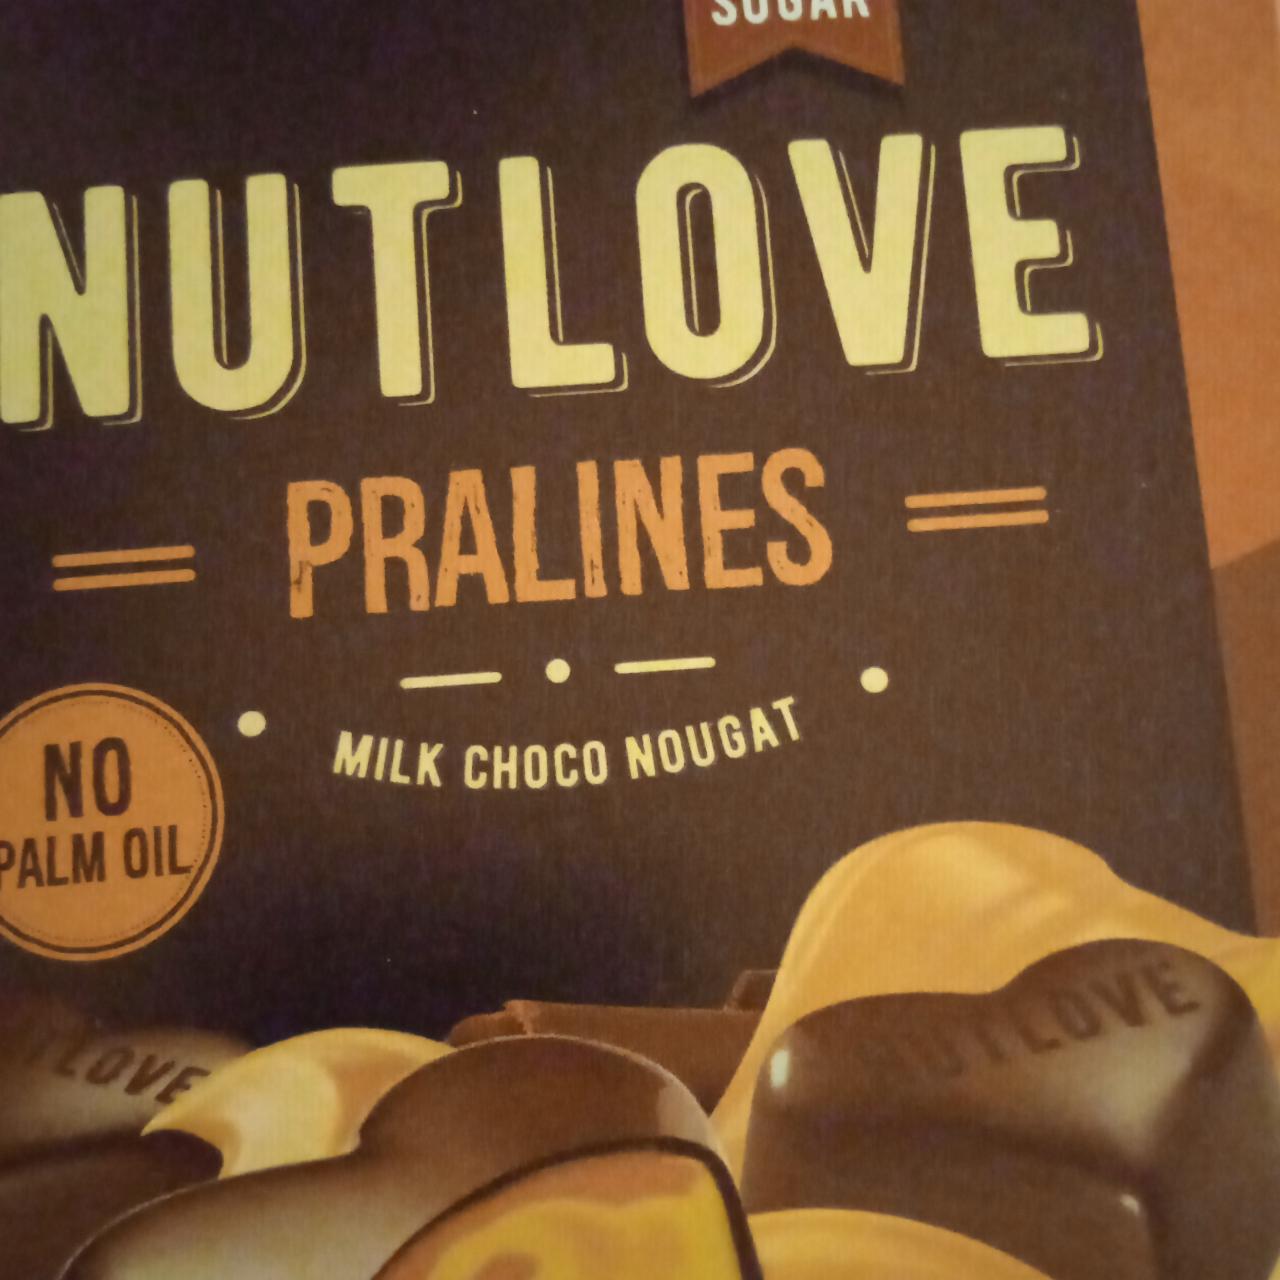 Fotografie - Pralines Milk Choco Nougat Nutlove